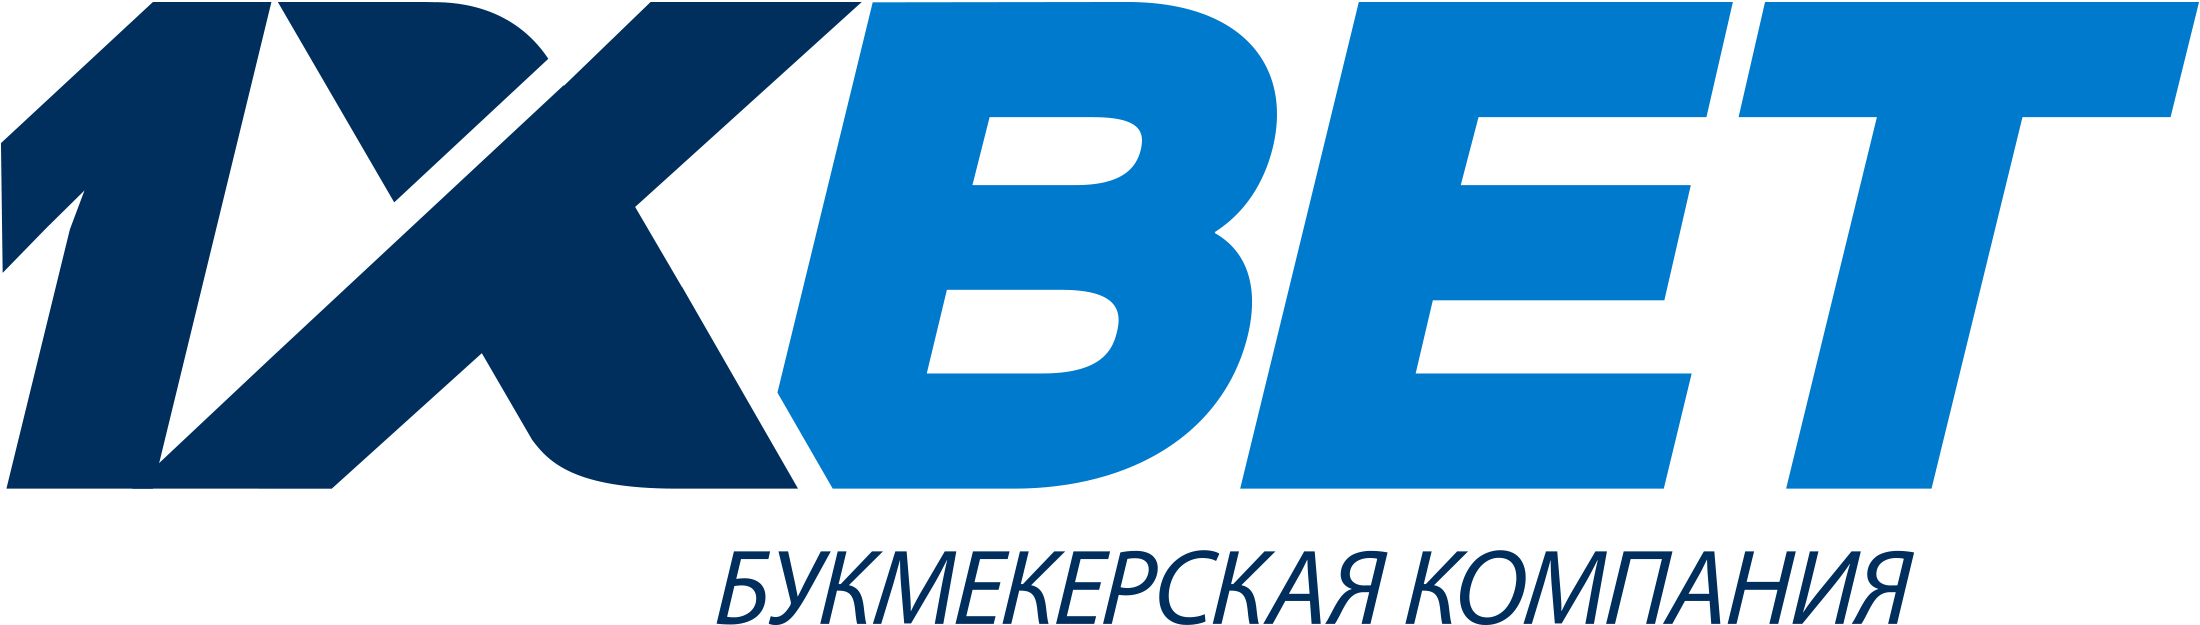 1xBet-Logo